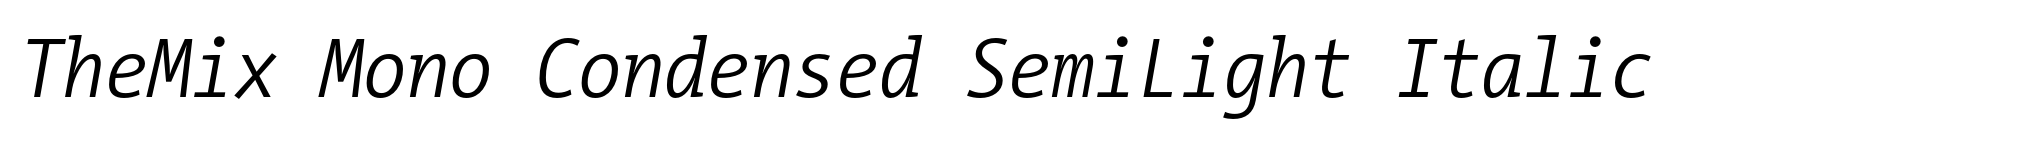 TheMix Mono Condensed SemiLight Italic image